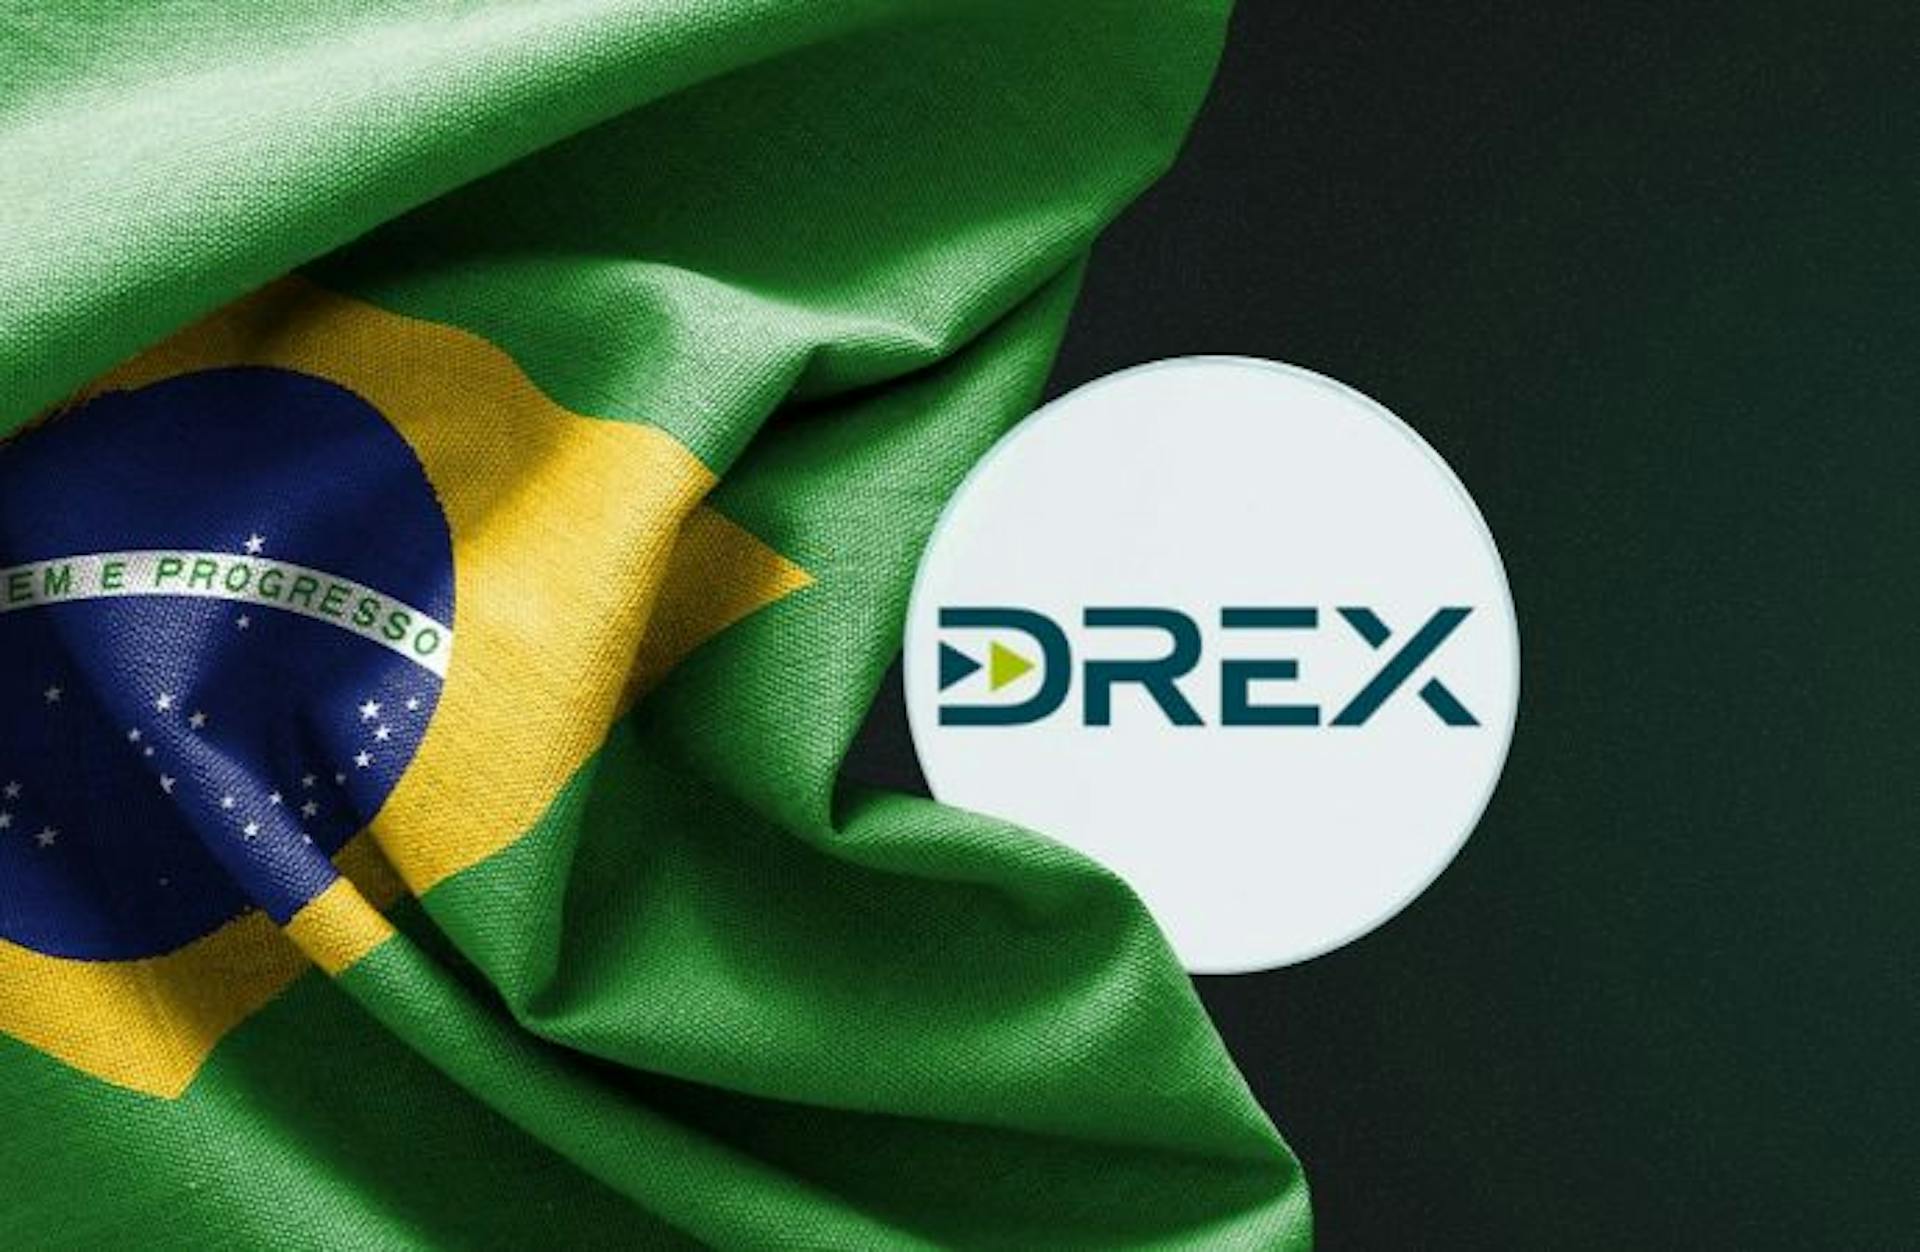 Brazilian DREX